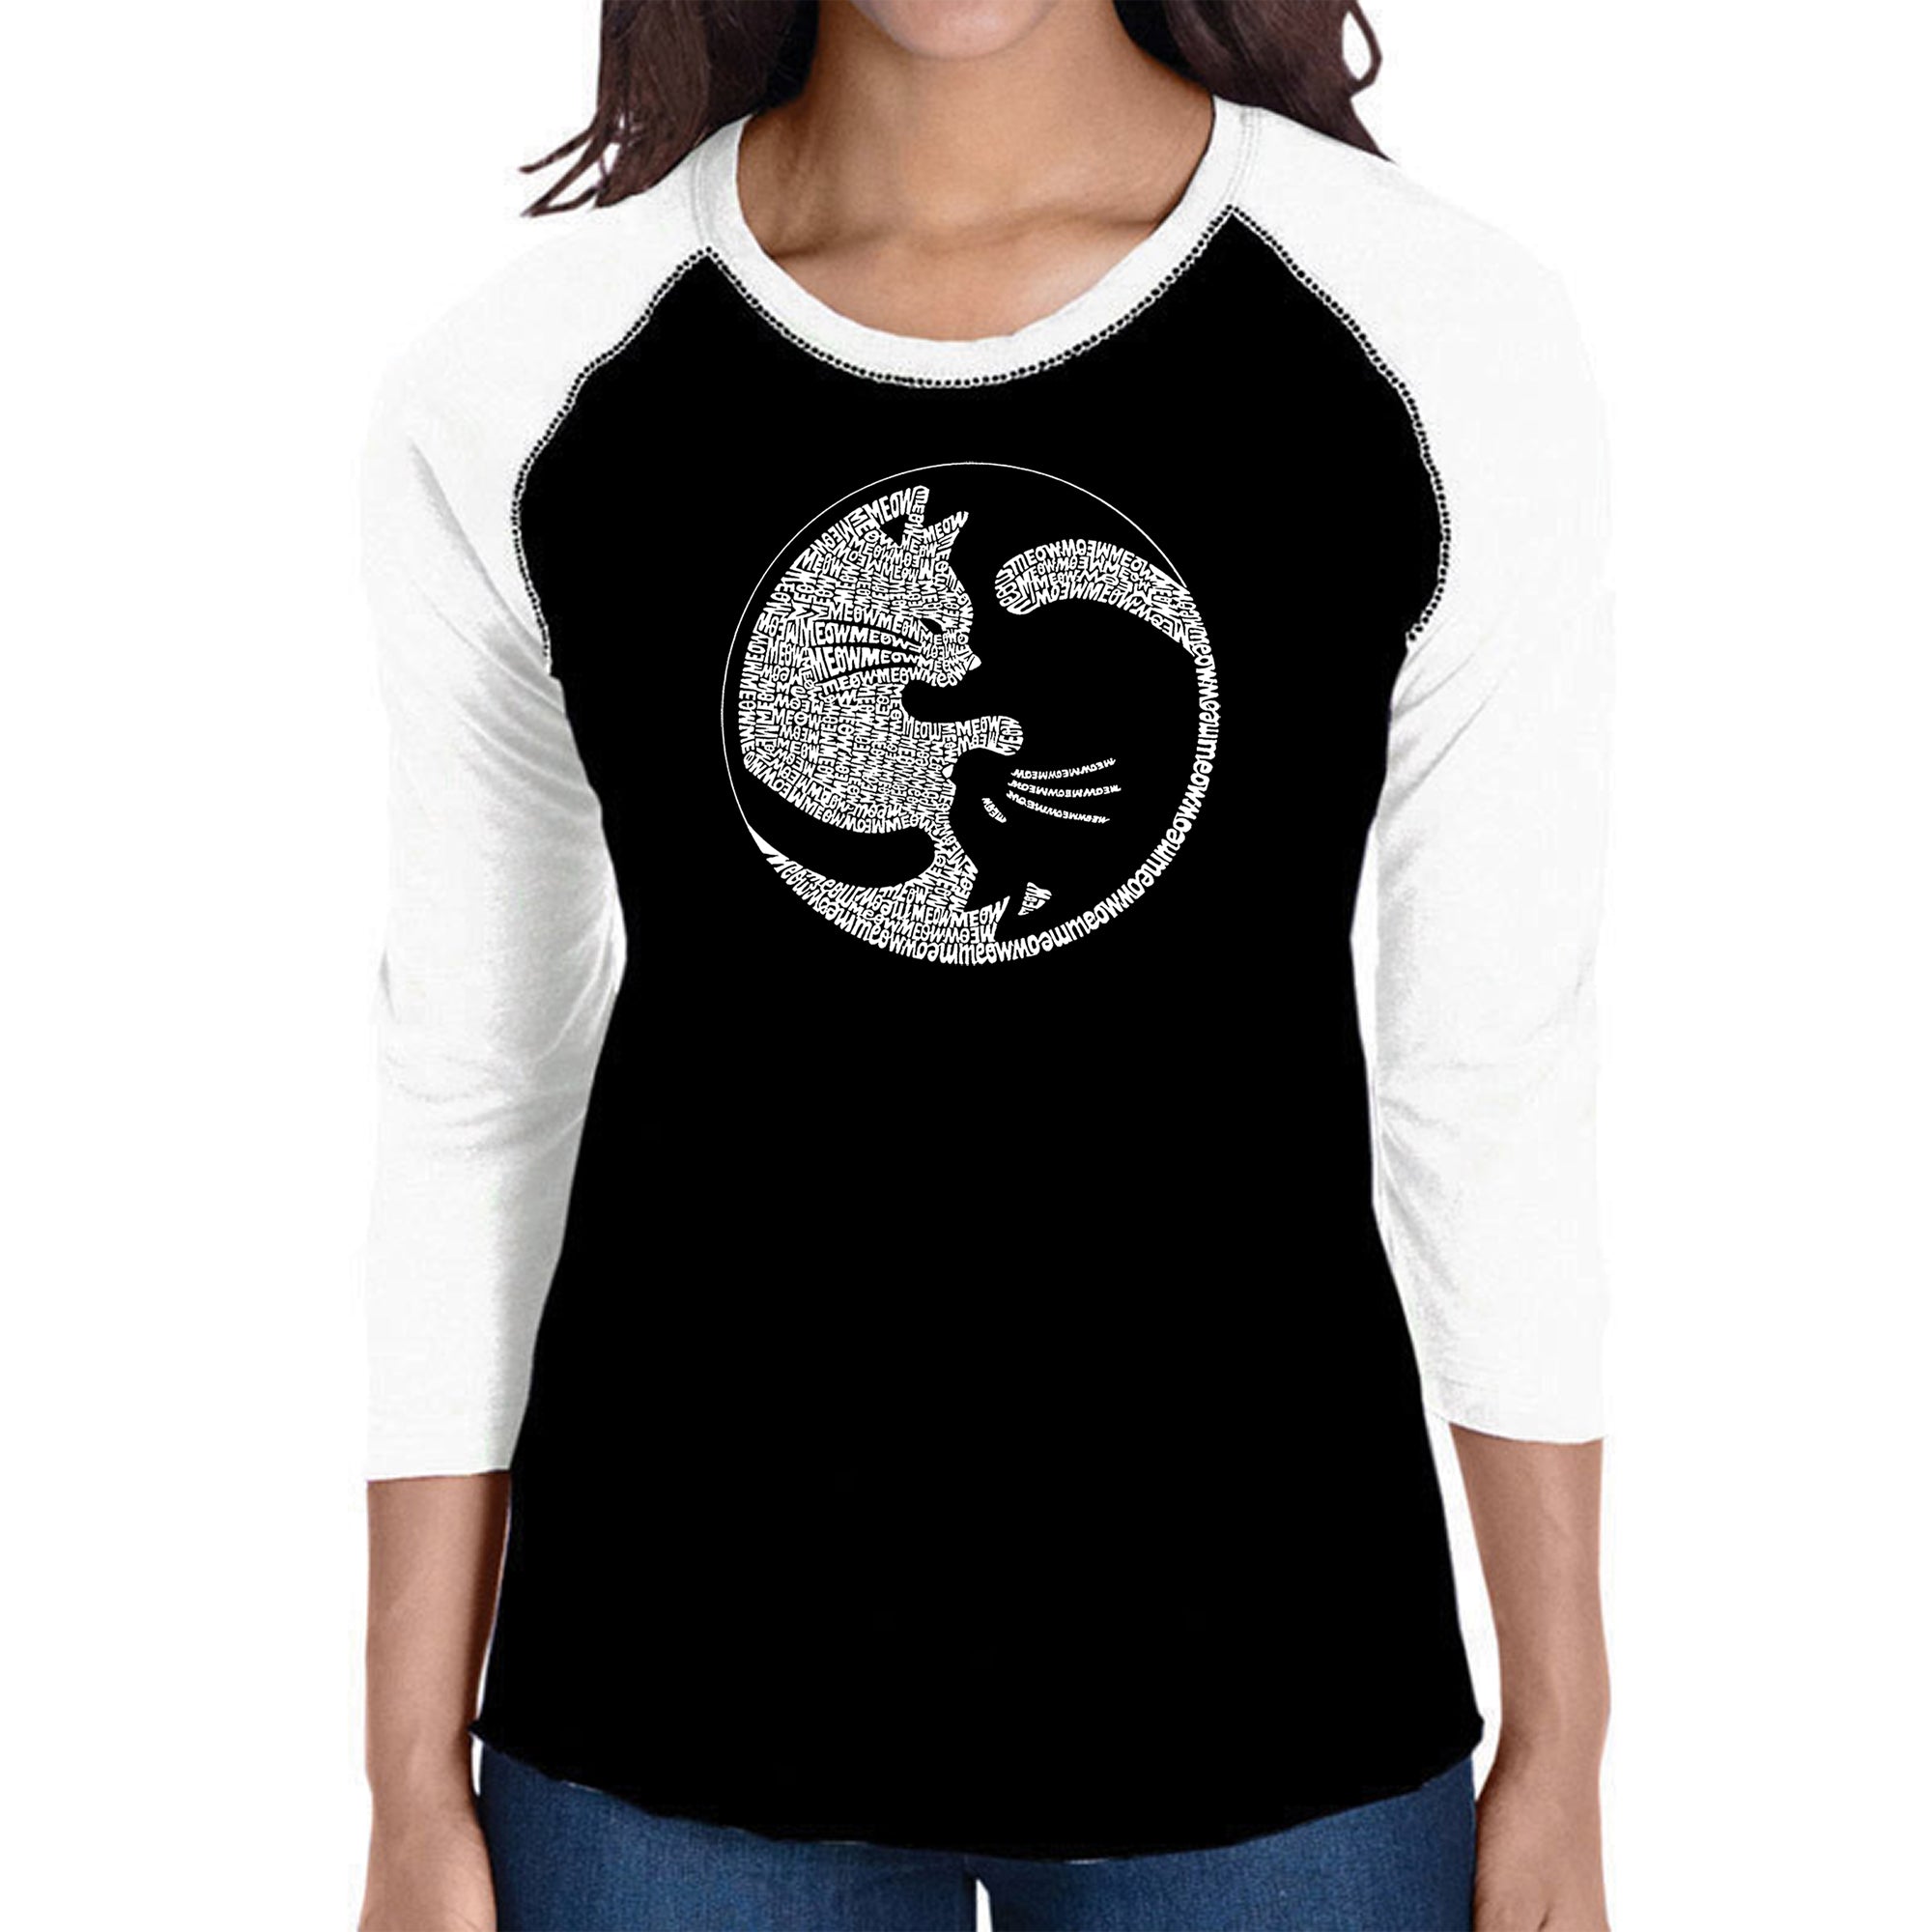 Yin Yang Cat - Women's Raglan Word Art T-Shirt - Black/White - Small